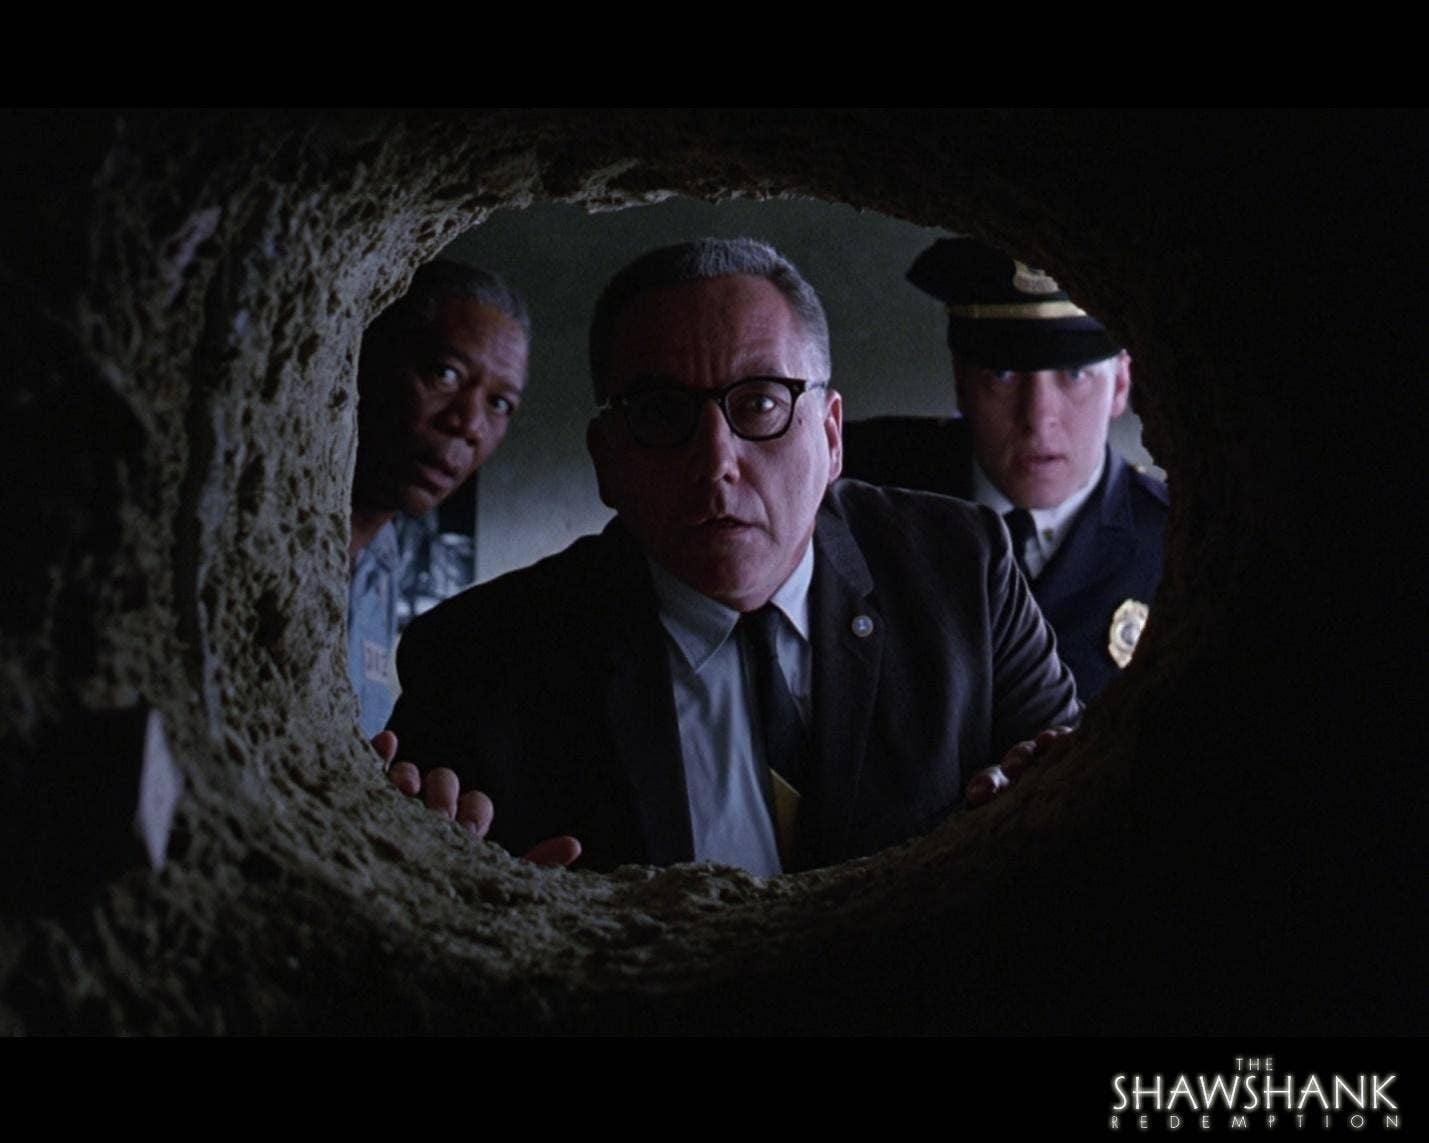 Bob Gunton in a Shawshank Redemption poster with Morgan Freeman and Clancy Brown